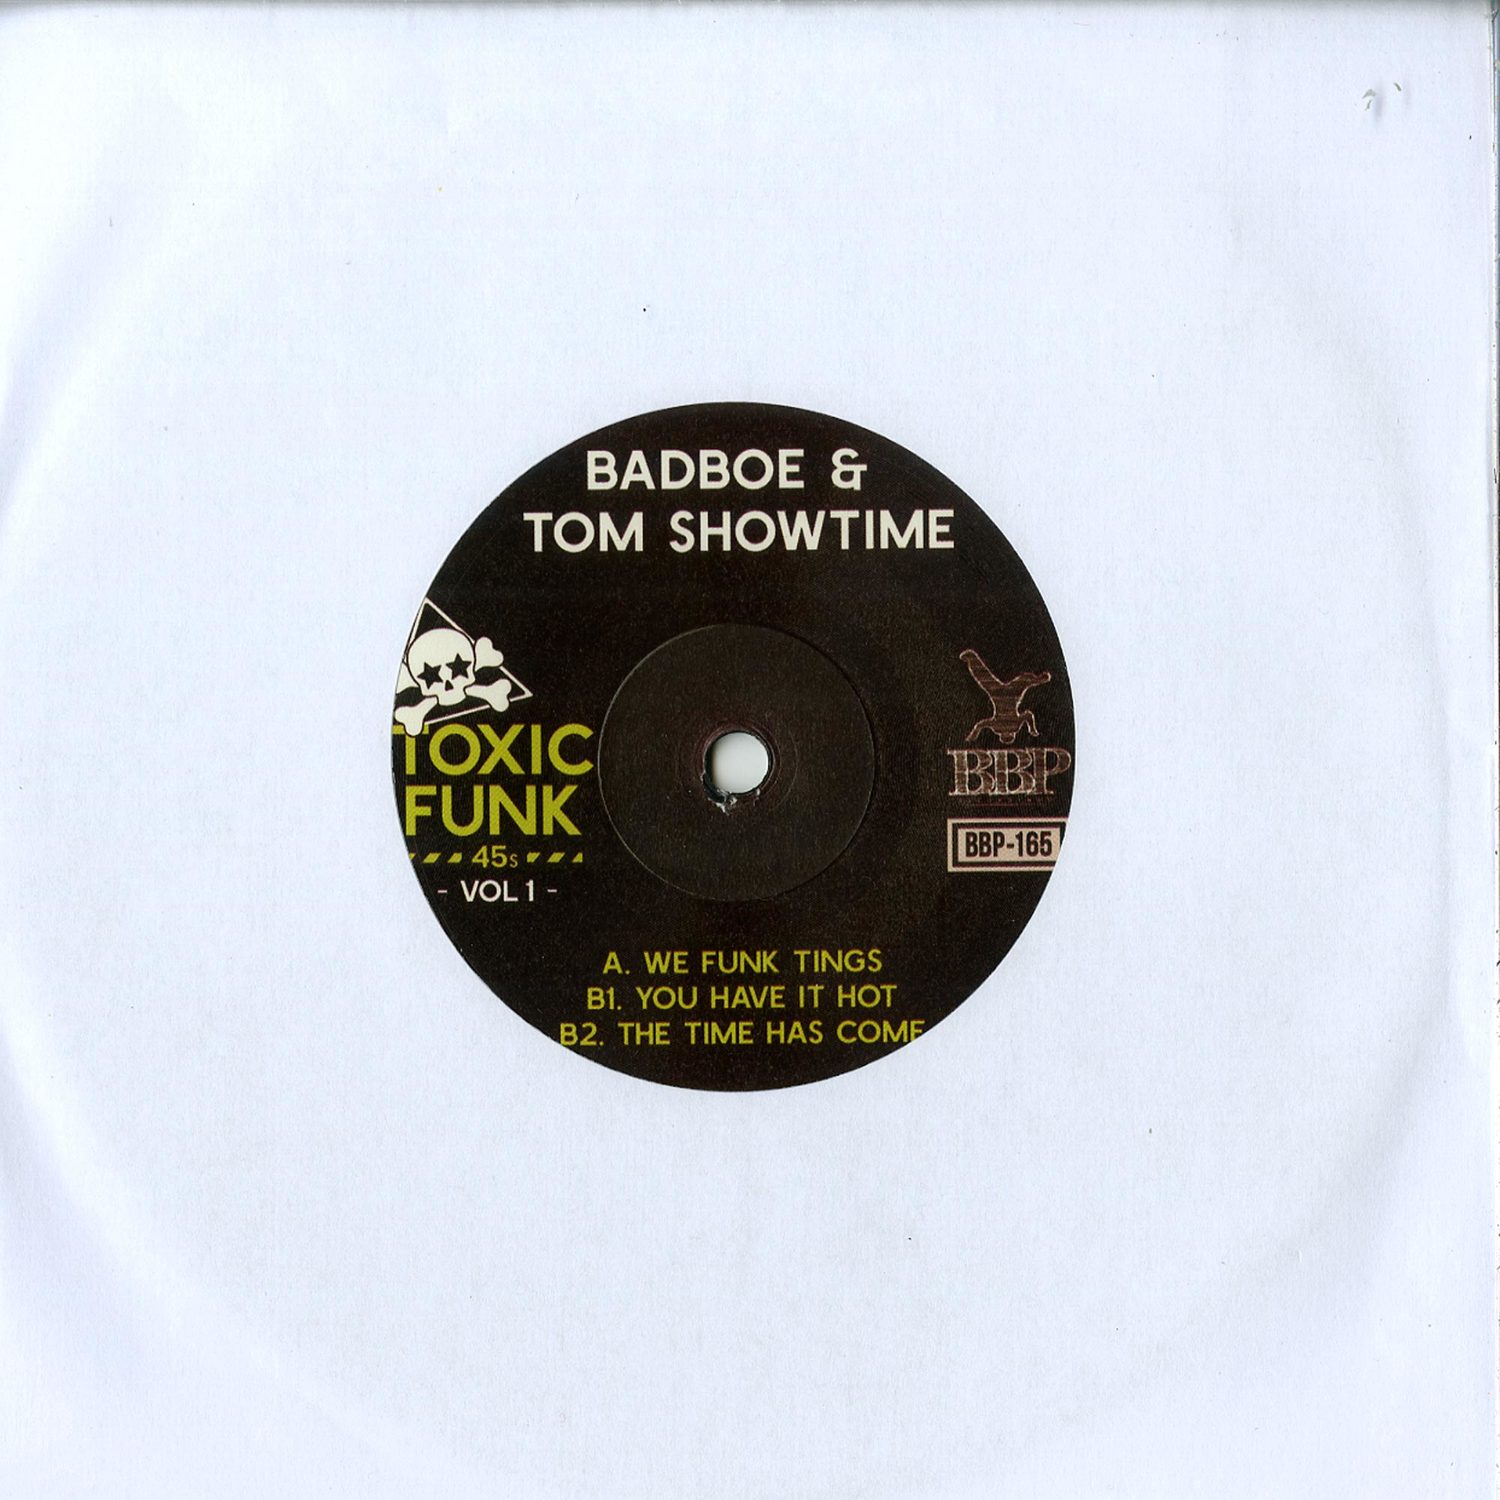 Badboe & Tom Showtime - TOXIC FUNK VOL.1 